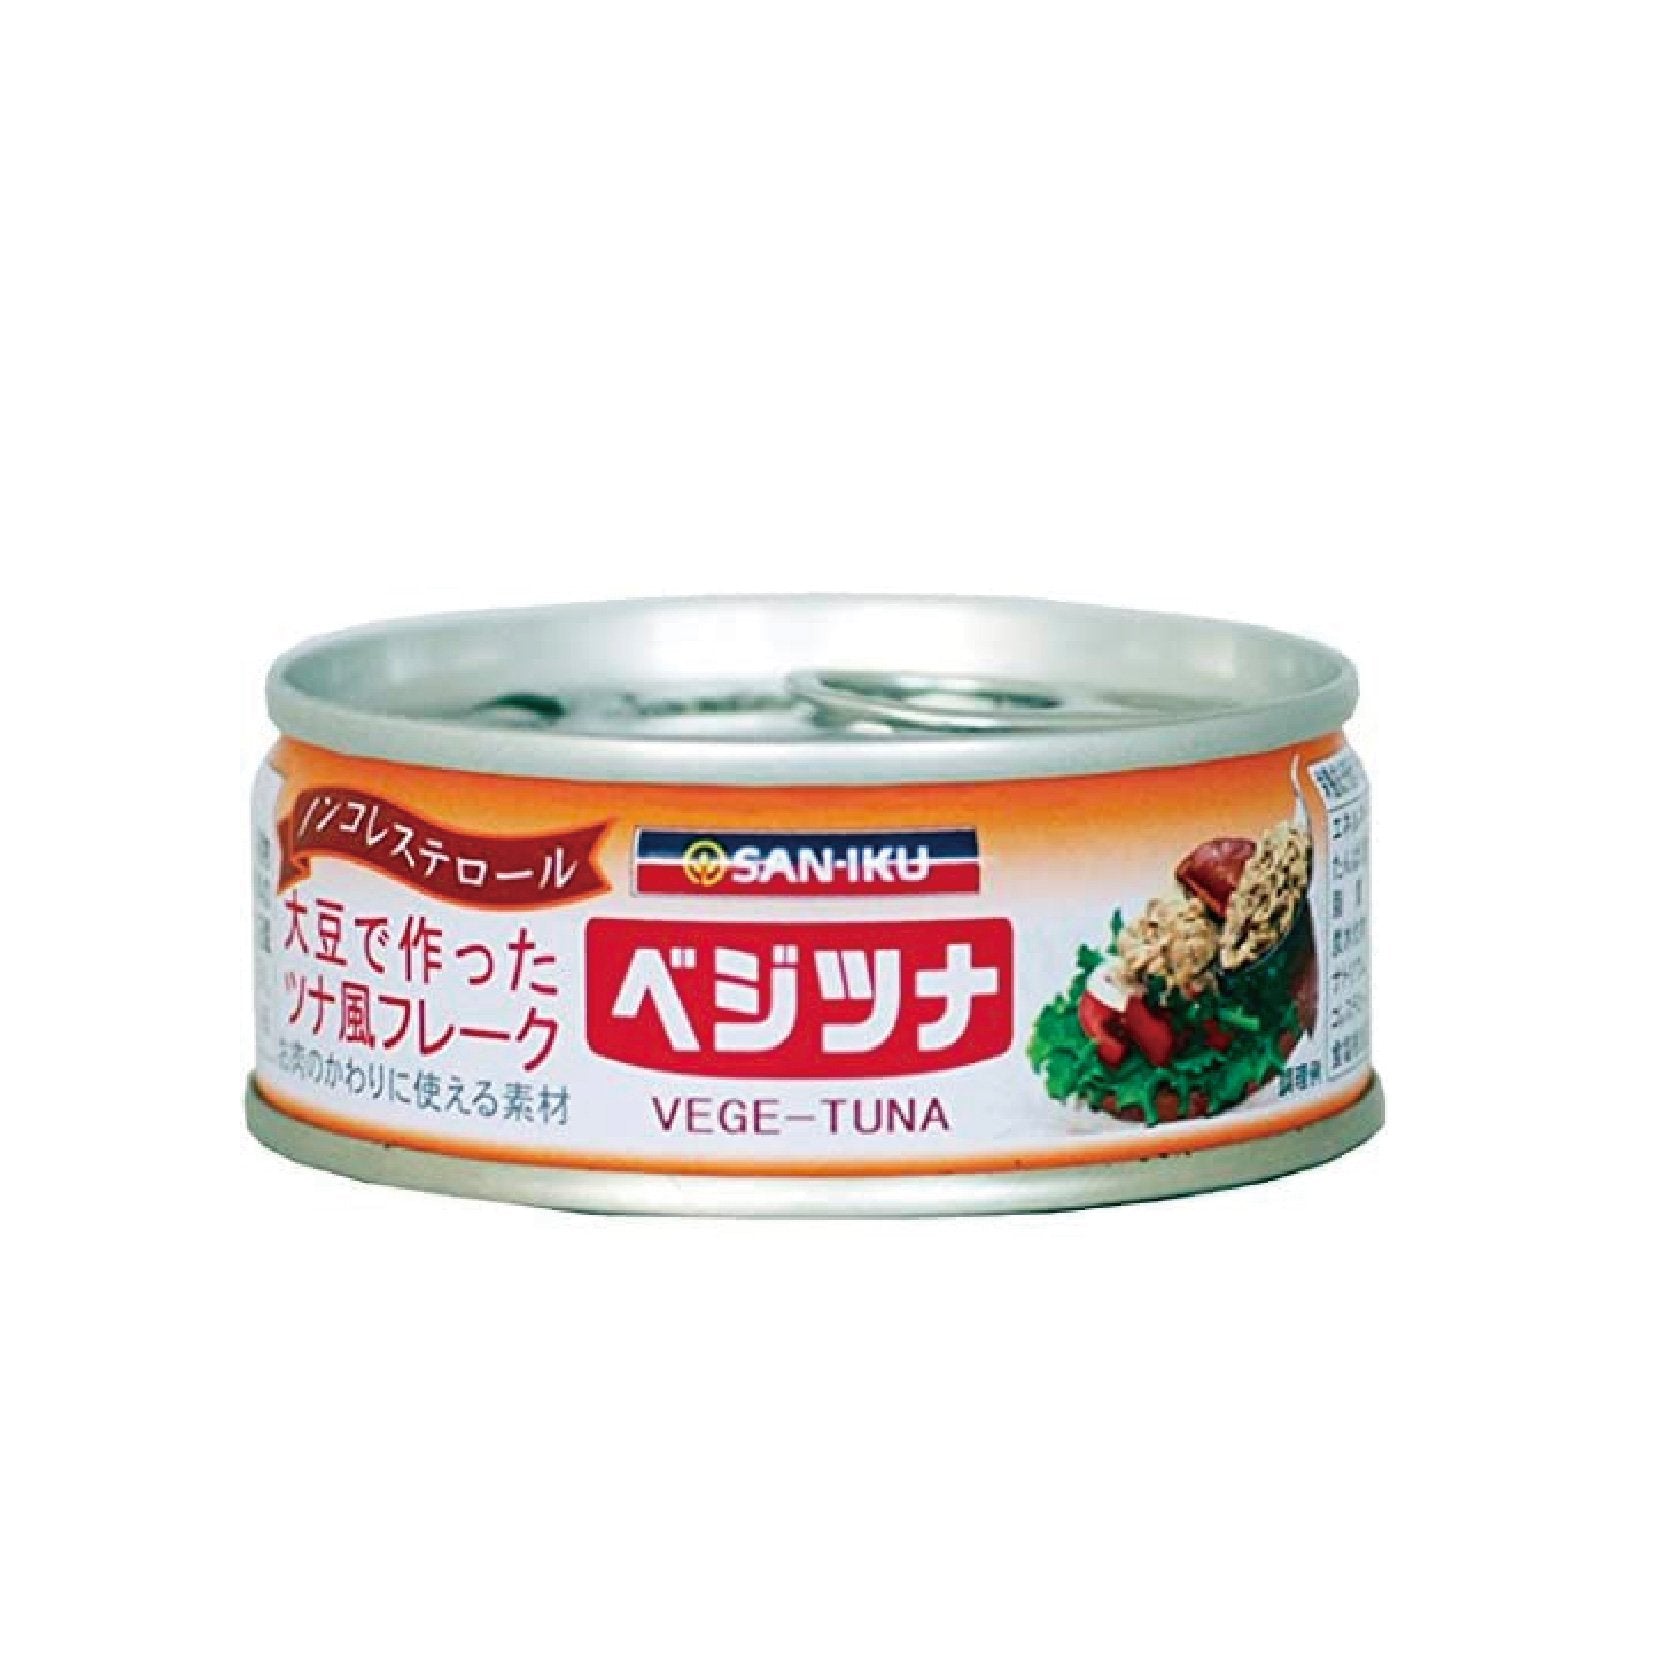 Saniku 罐裝素吞拿魚 [90g]